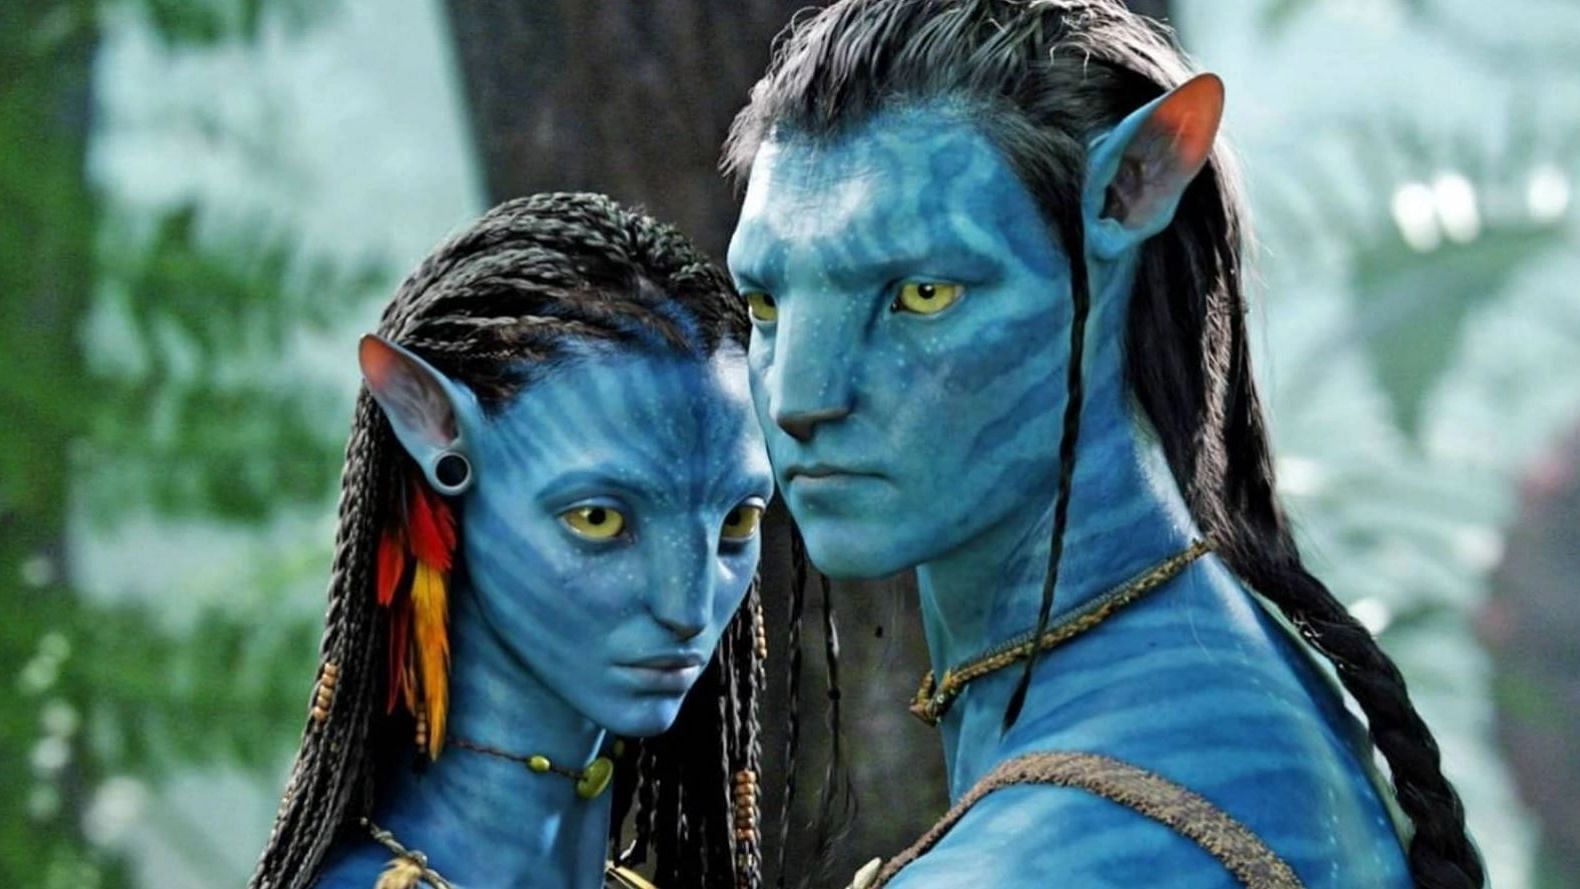 <div class="paragraphs"><p>'Avatar: The Way of Water 16 दिसंबर को होगी रिलीज</p></div>